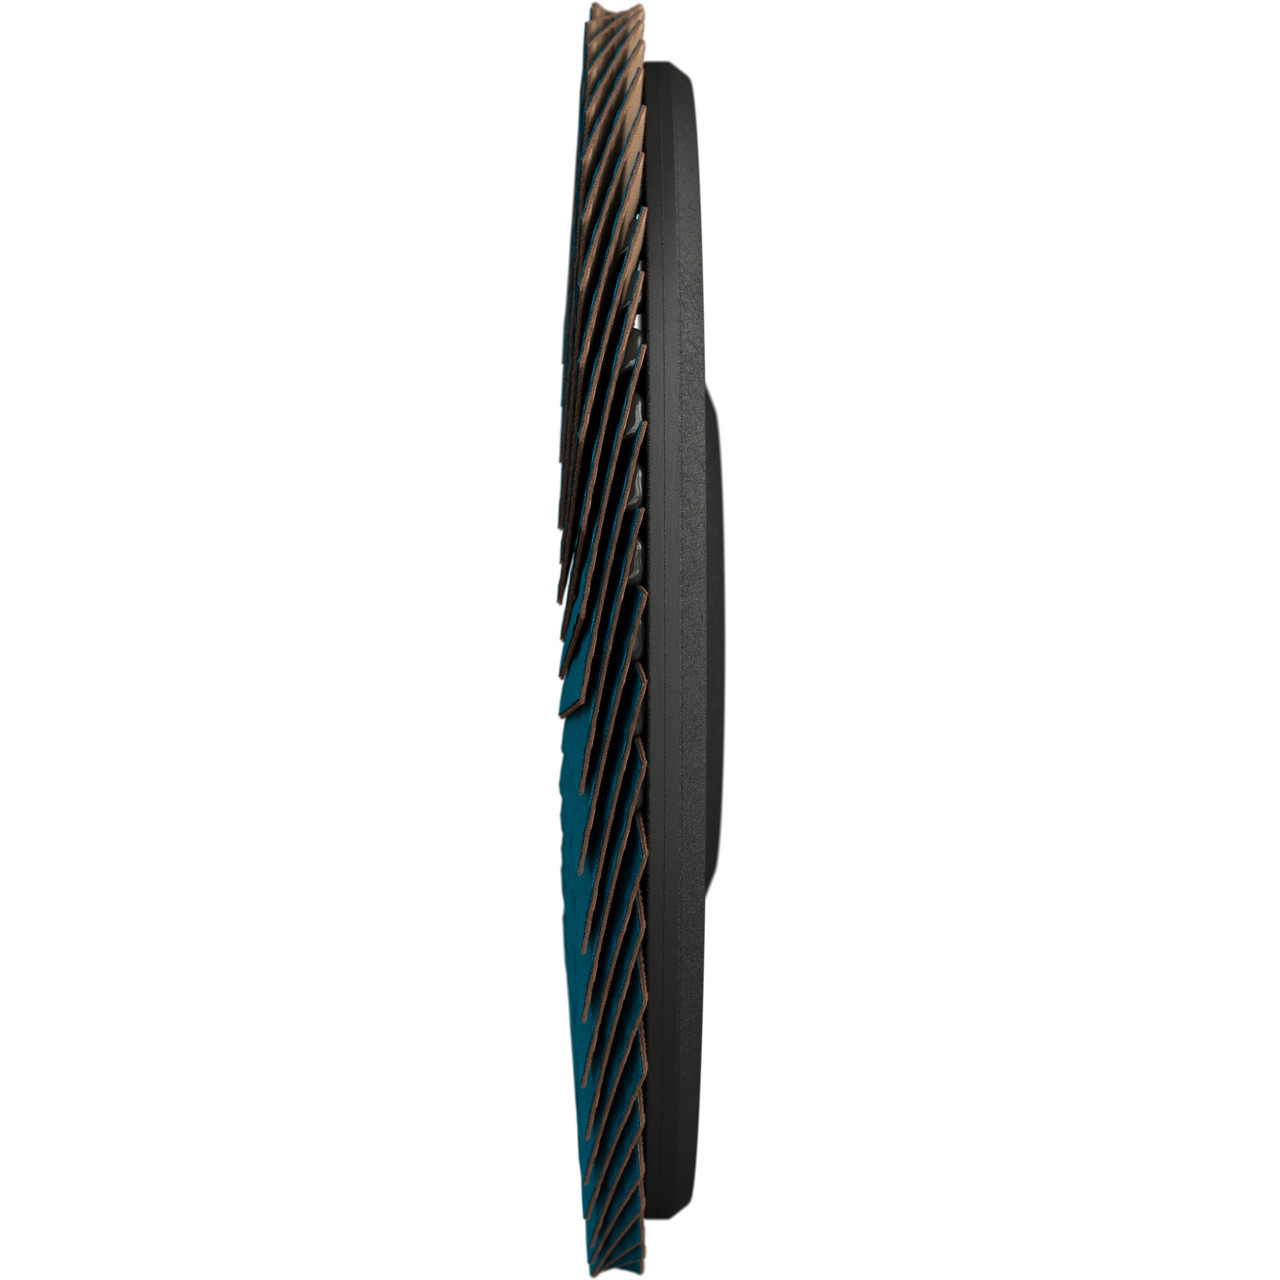 TYROLIT Fächerscheibe DxH 125x22,23 LONGLIFE für Stahl, P60, Form: 28N - gerade Ausführung (Kunststoffträgerkörper), Art. 34063389